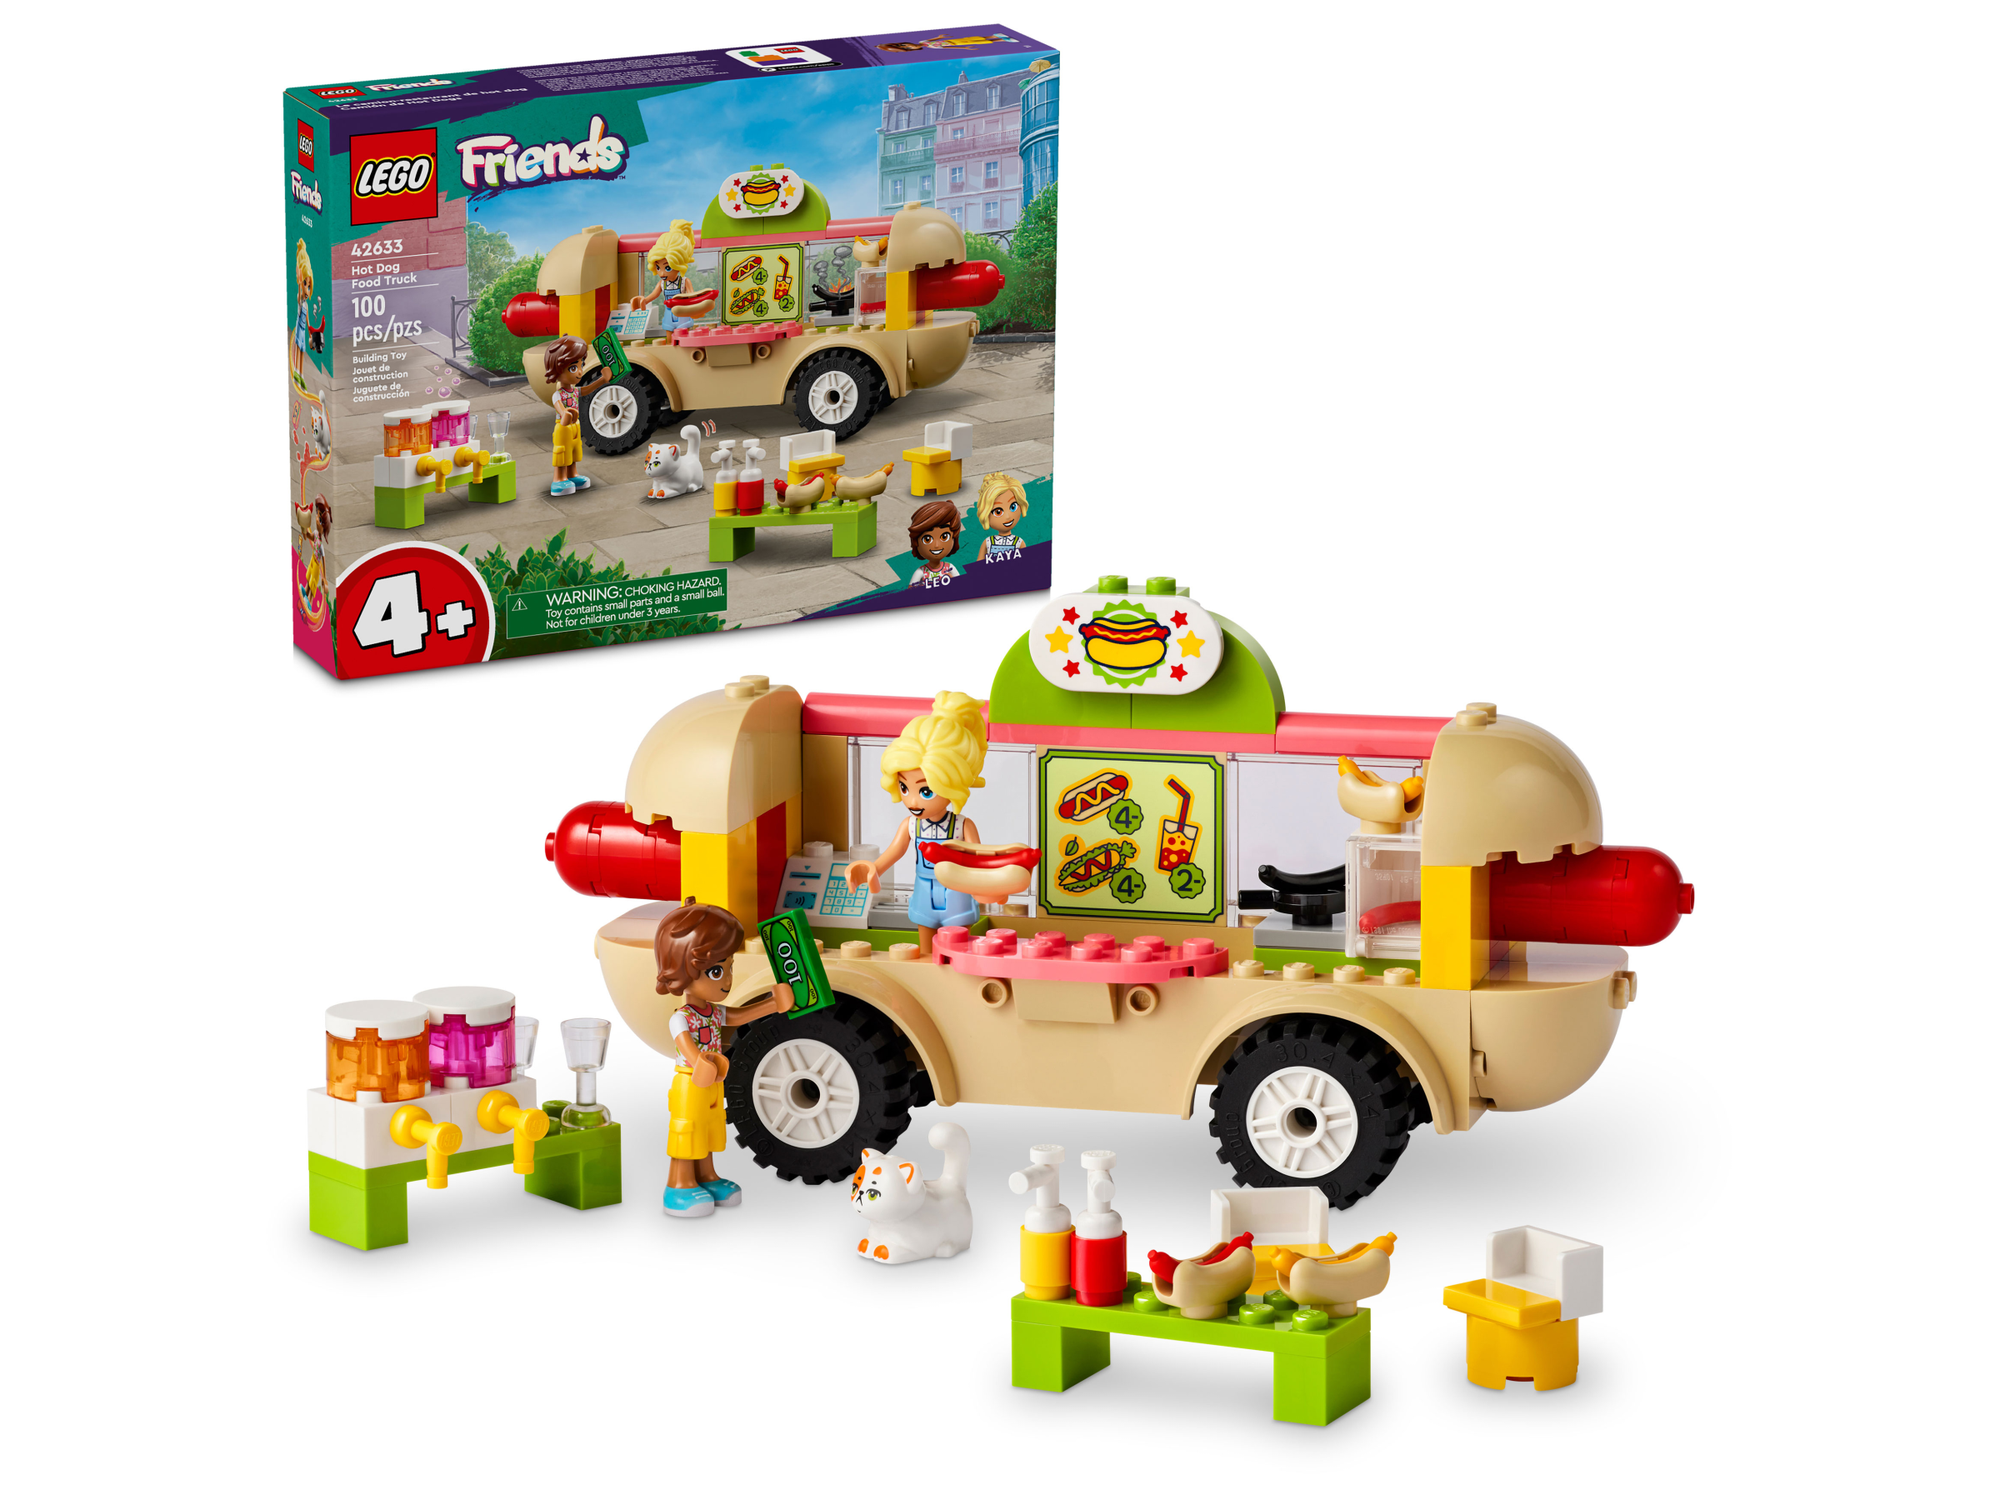 LEGO Friends 42633 Hot Dog Food Truck, 100 дет.